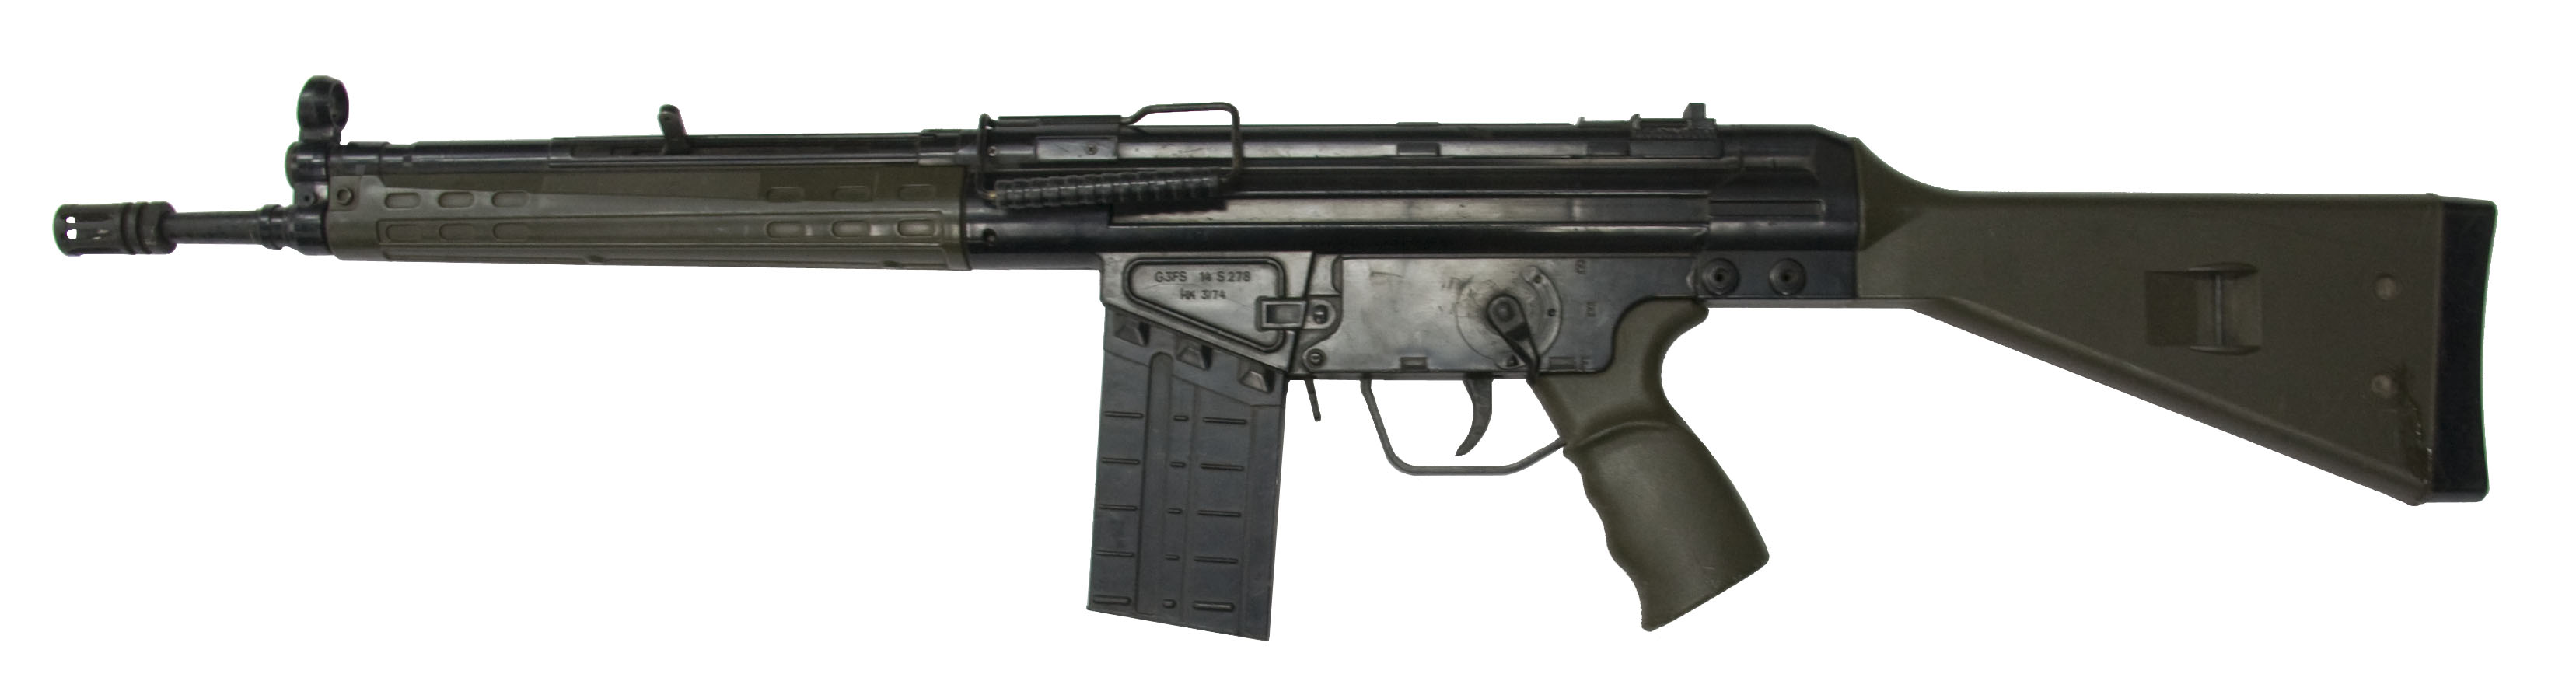 Heckler & Koch G3 Assault Rifle #25